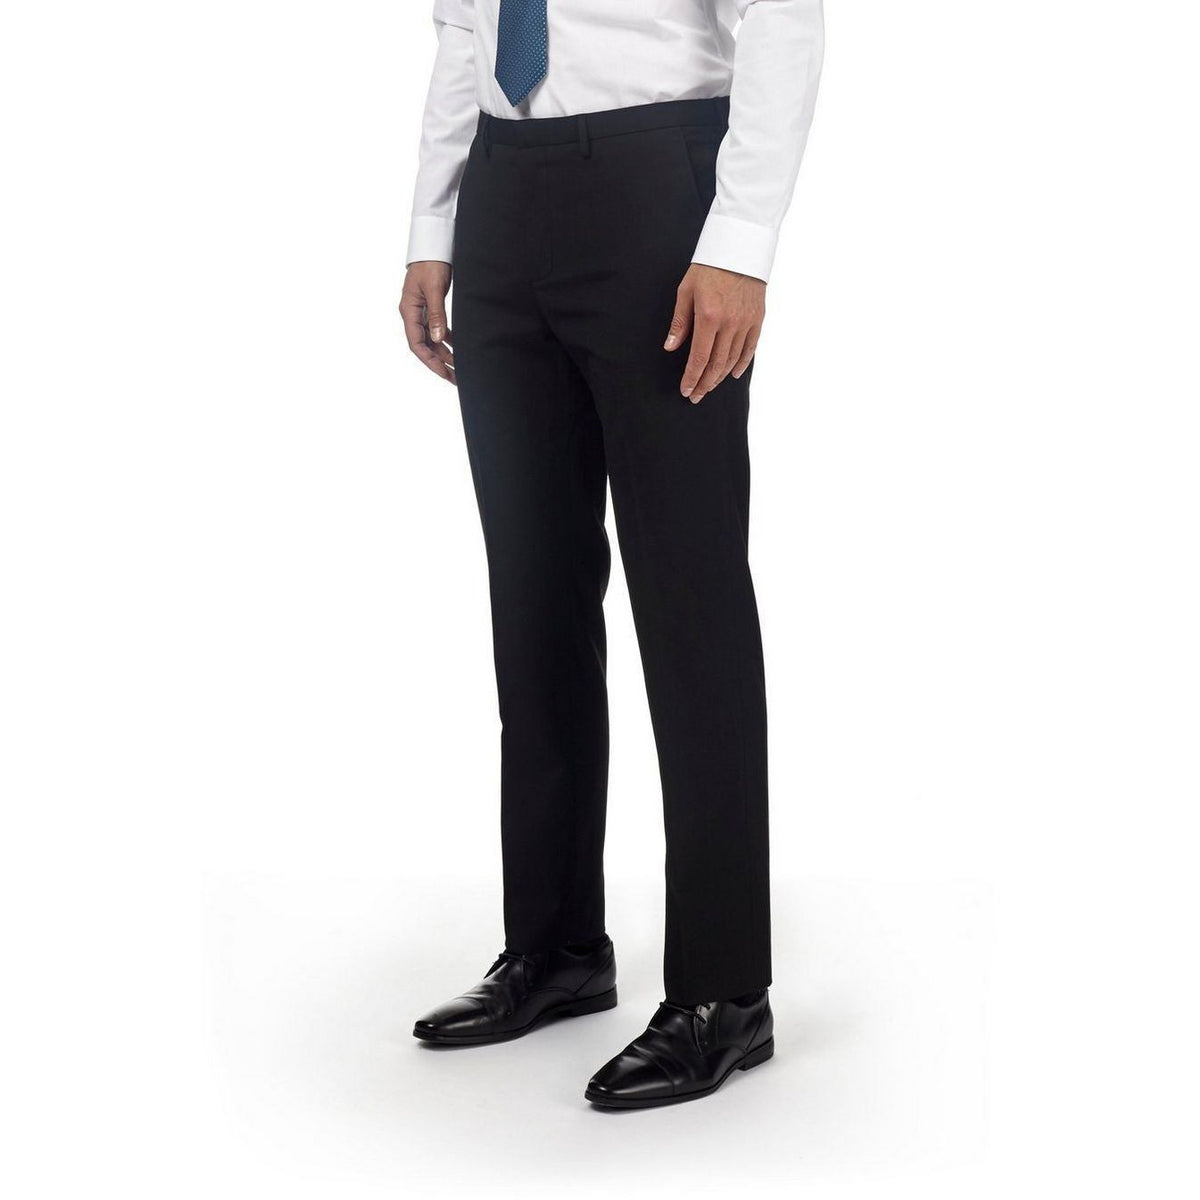 Boys Black Grey /& Charcoal Grey Regular Fit Zip Up School Trousers Elastic Adjustable Waist 3-16 Yrs